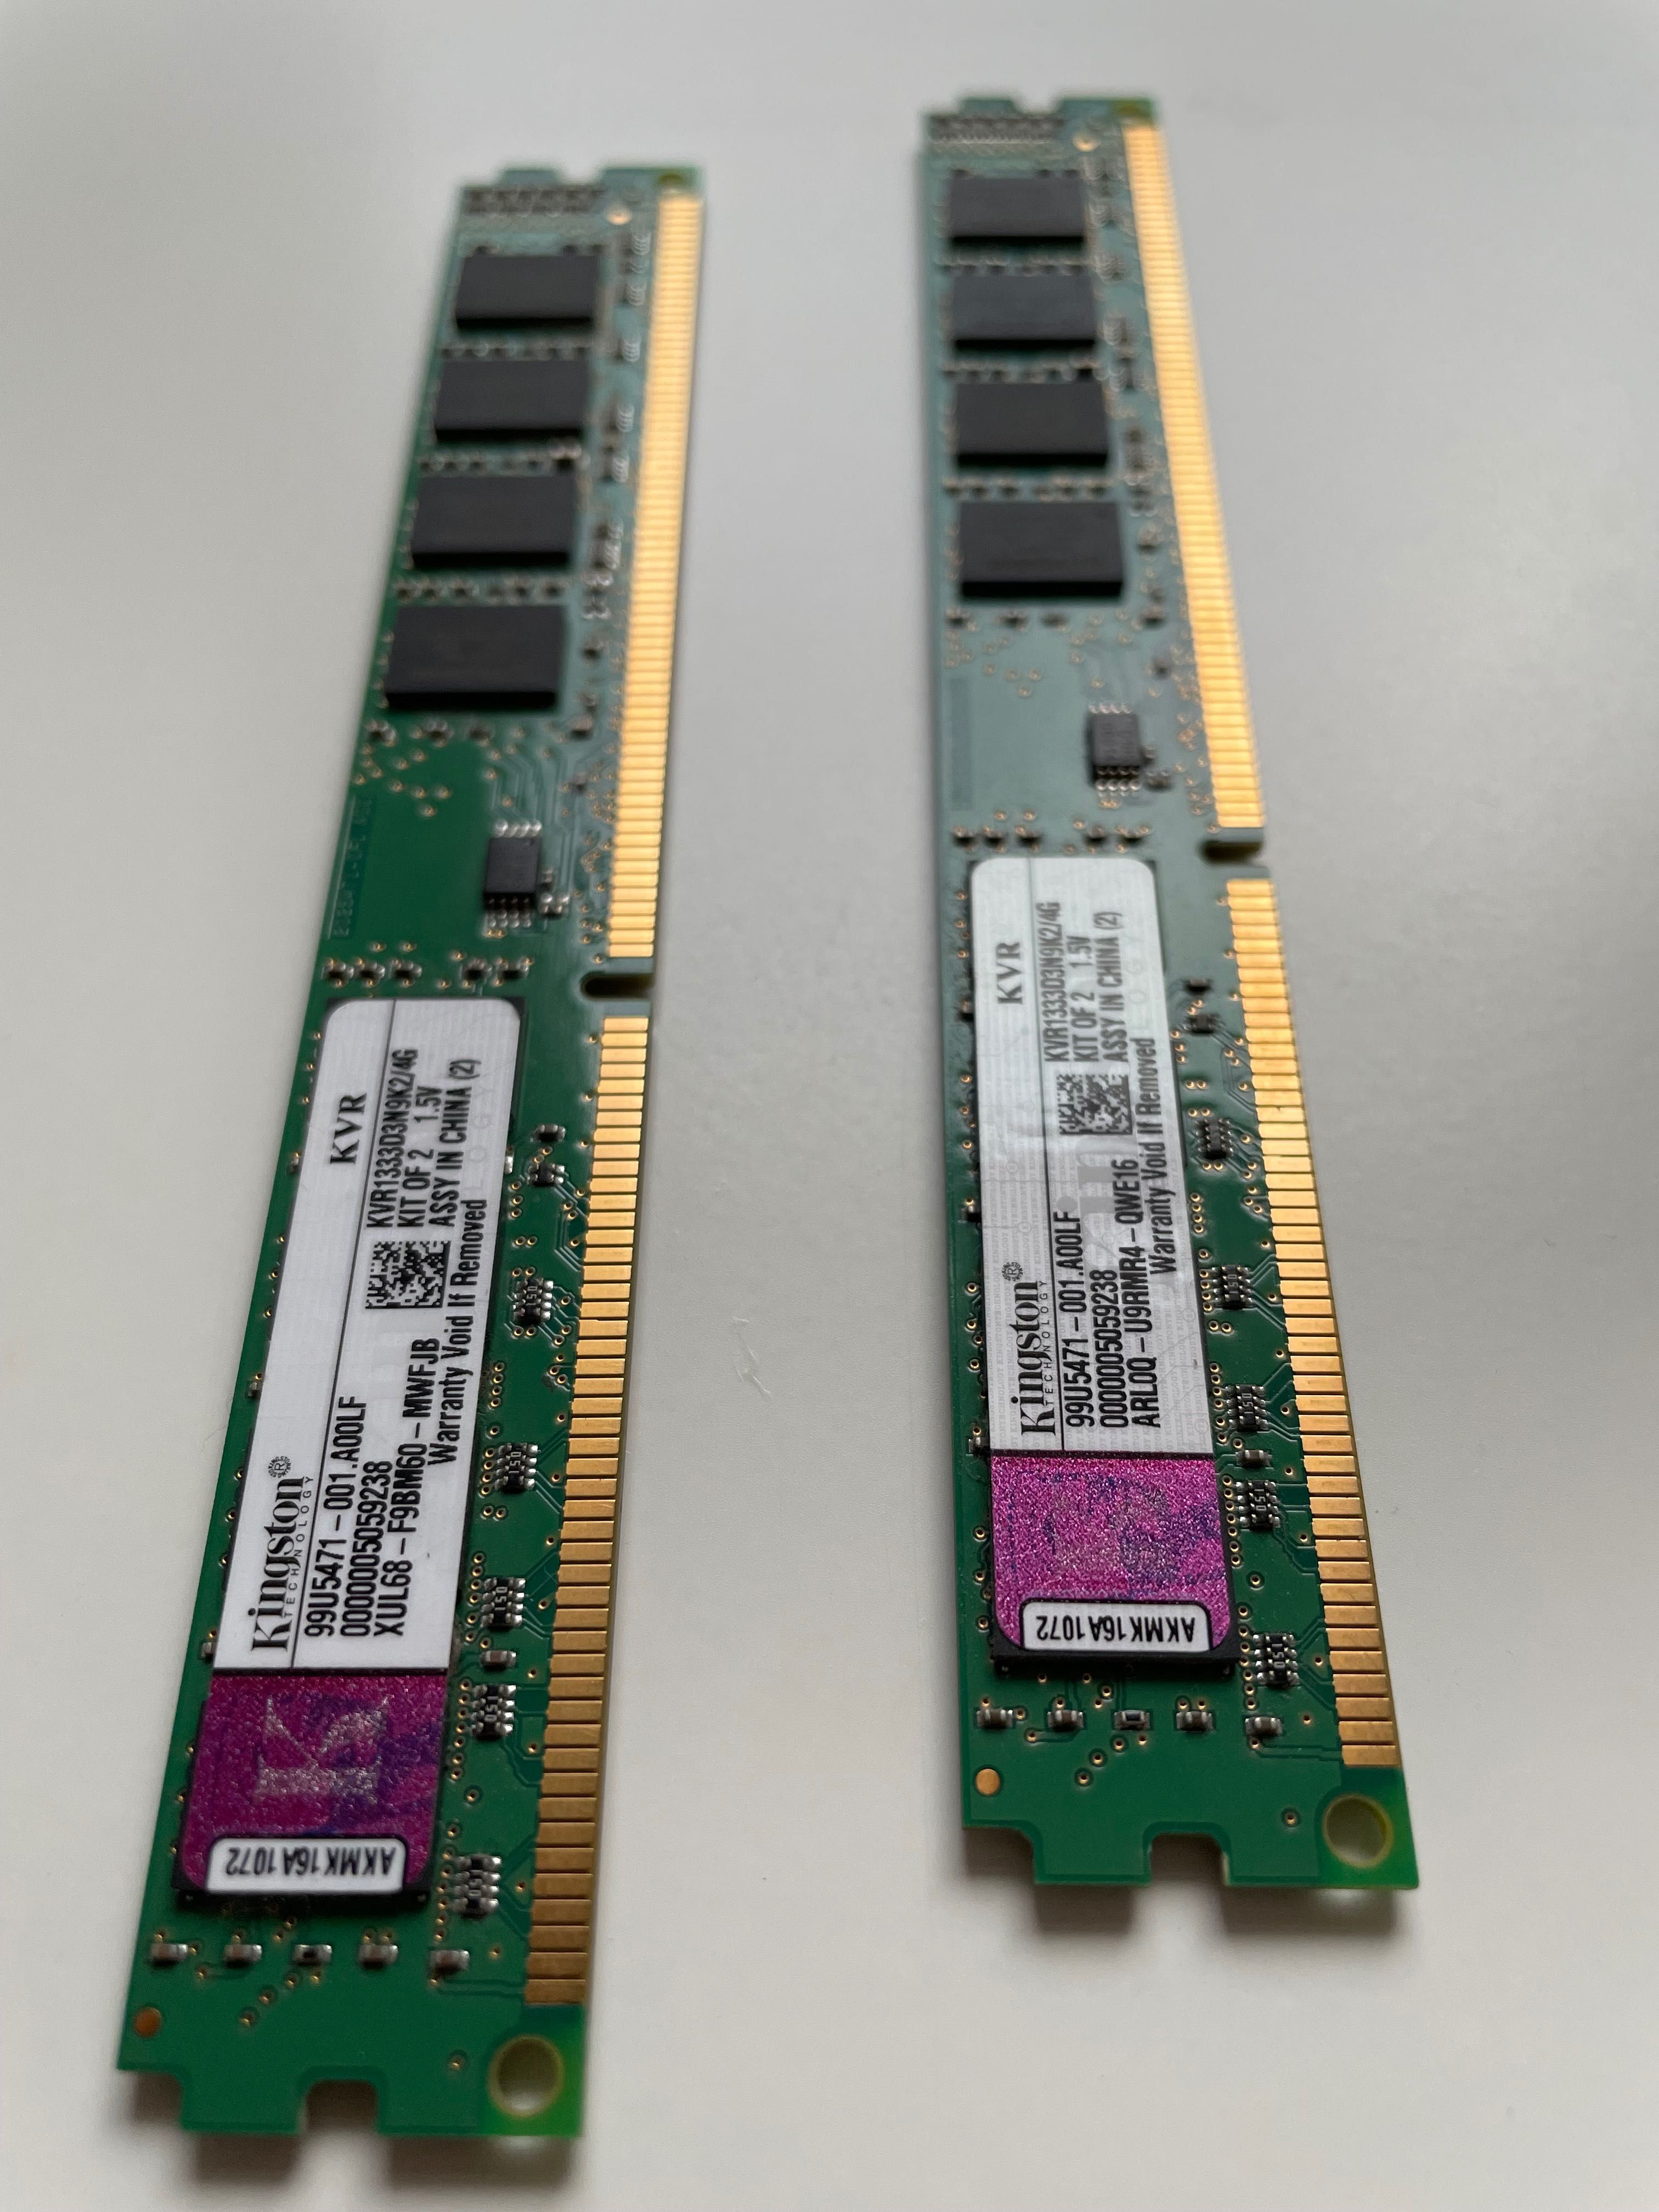 RAM Kingston KVR1333D3N9K2/4G 2x2GB